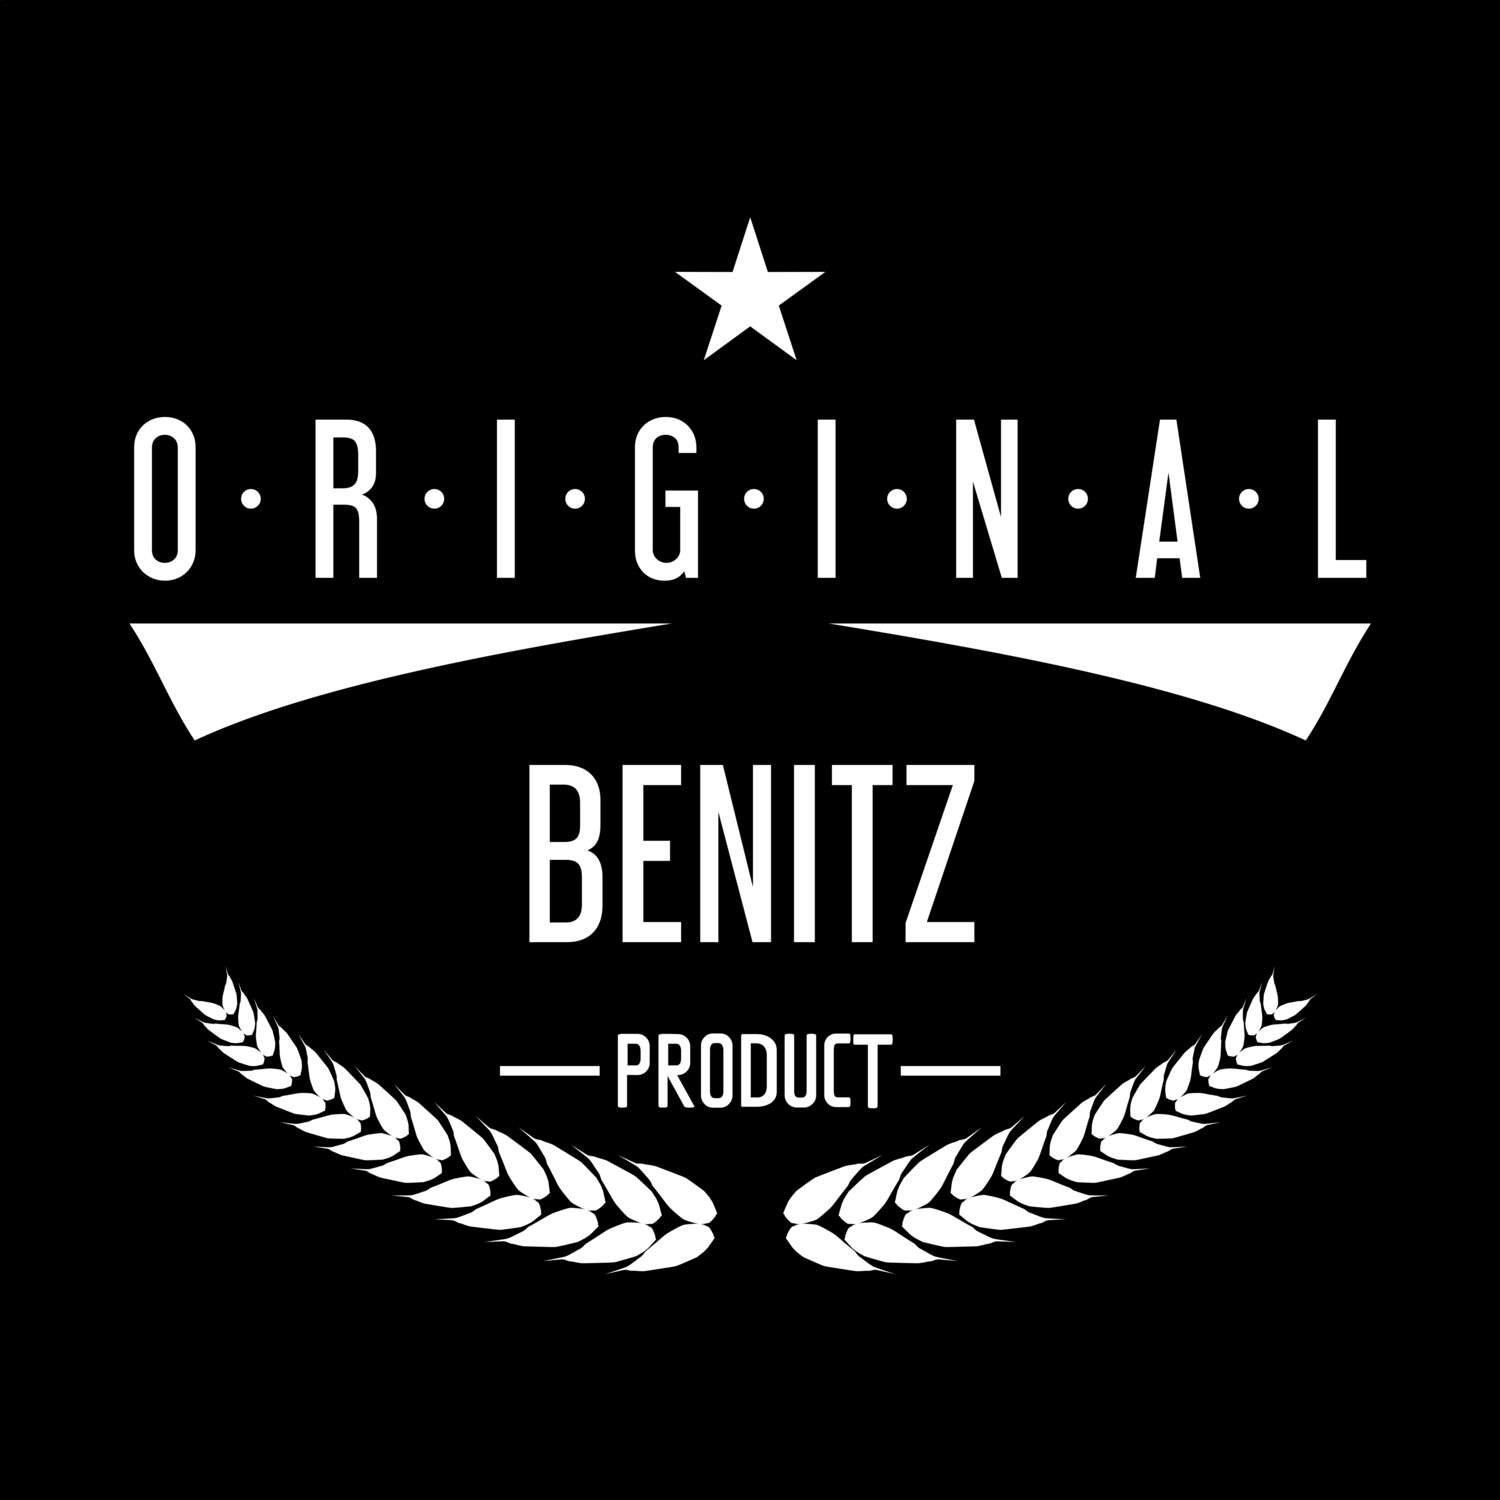 Benitz T-Shirt »Original Product«